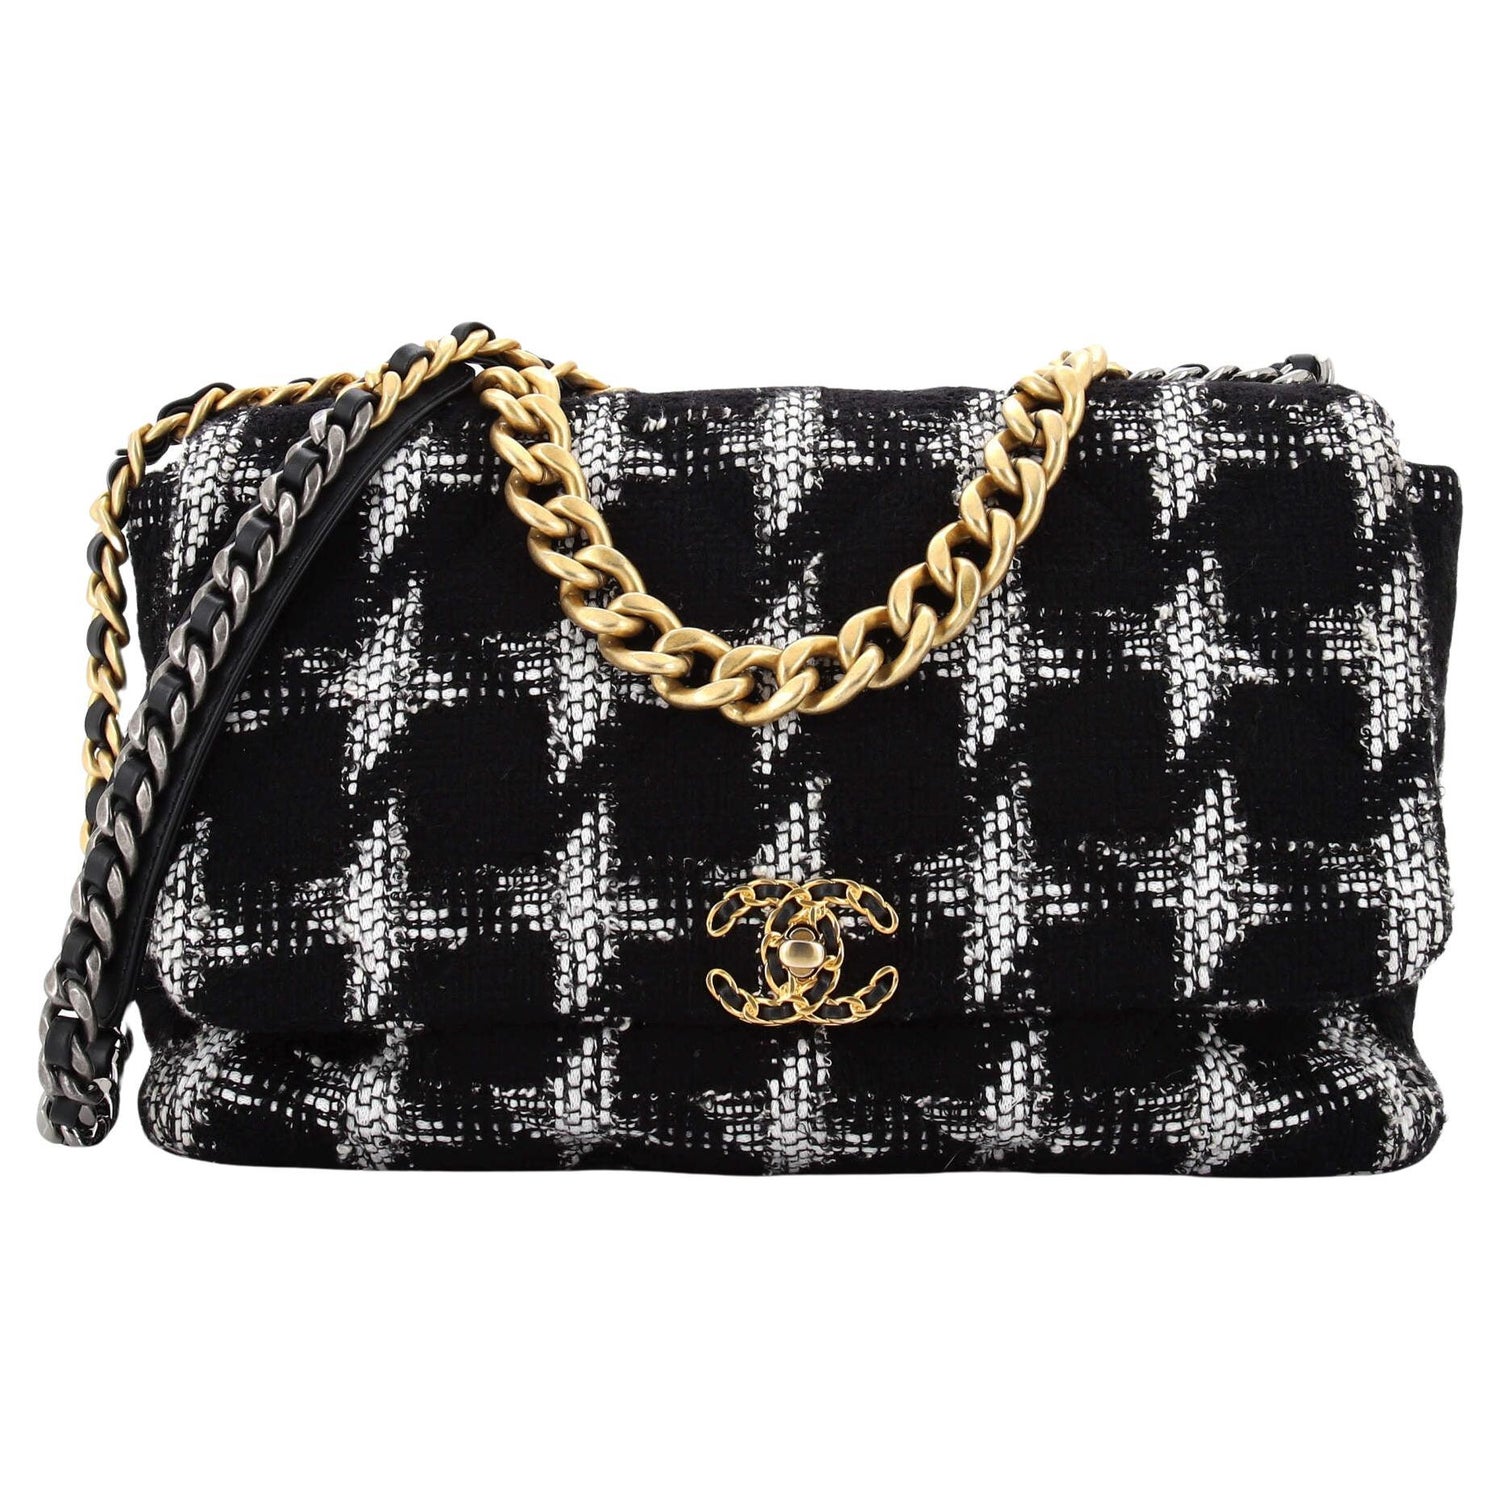 Chanel 19 Houndstooth Bag - 2 For Sale on 1stDibs